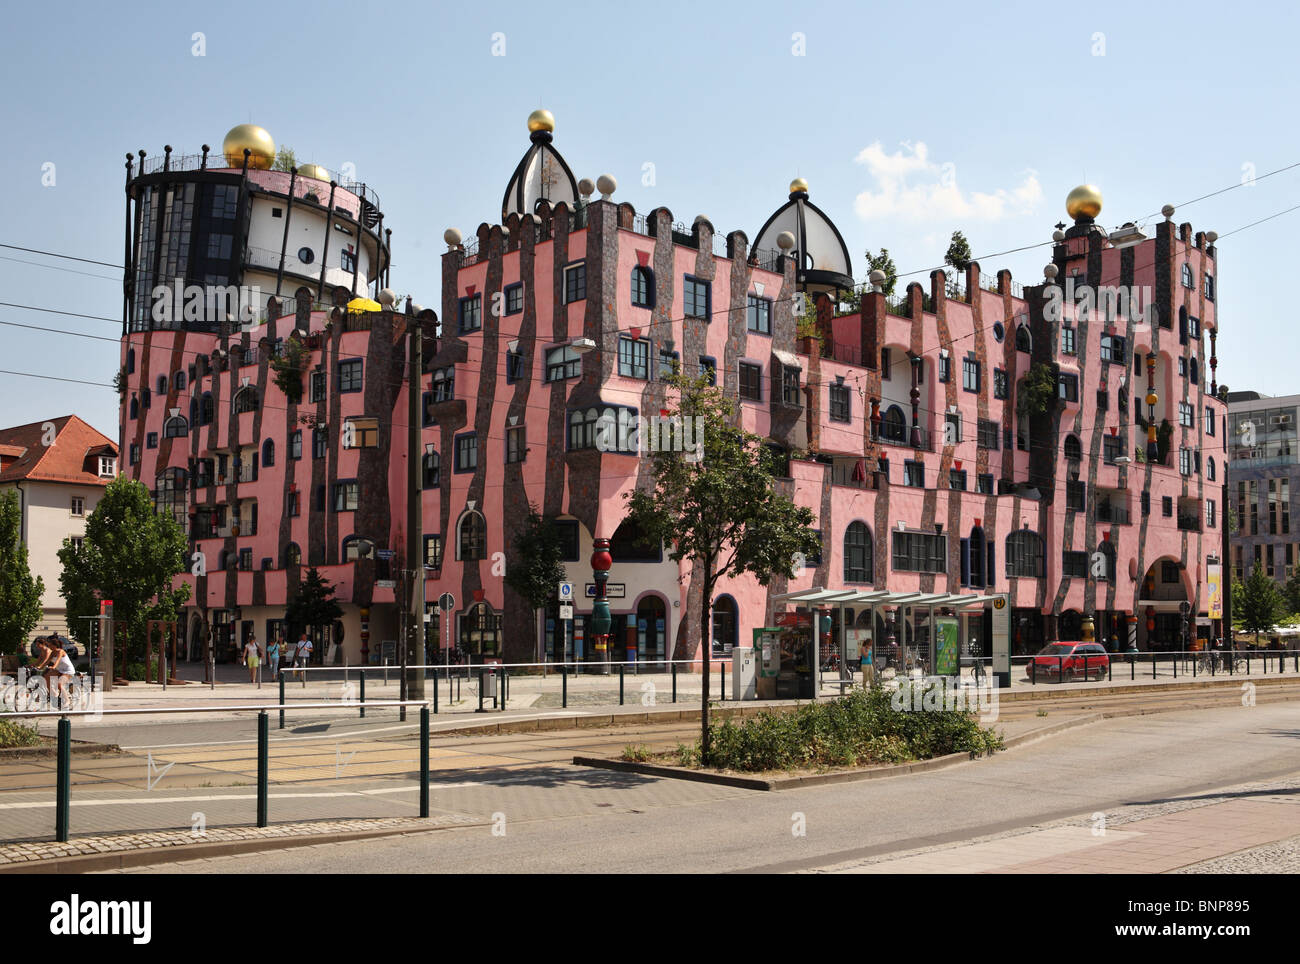 The Green Citadel of Magdeburg designed by Friedensreich Hundertwasser Stock Photo